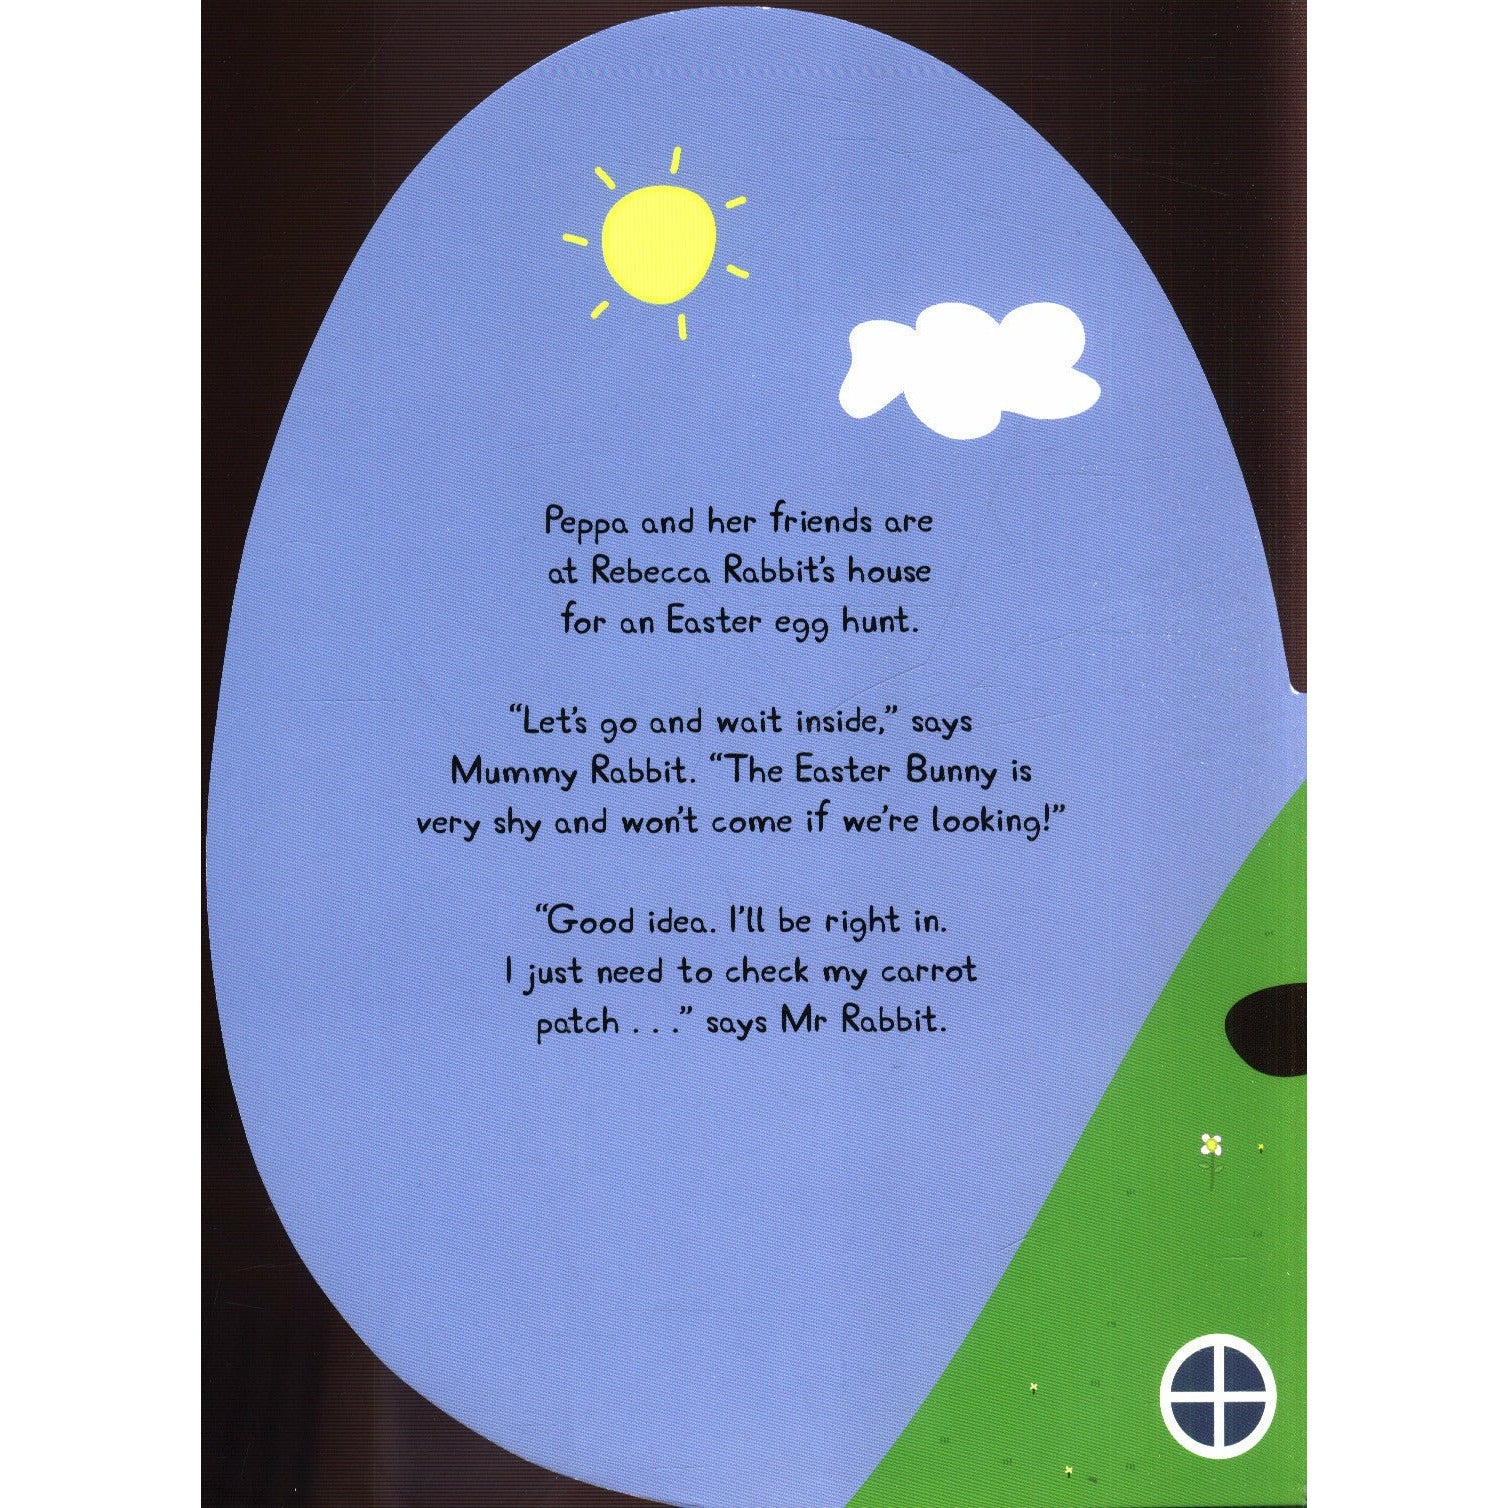 Peppa Pig: Easter Egg